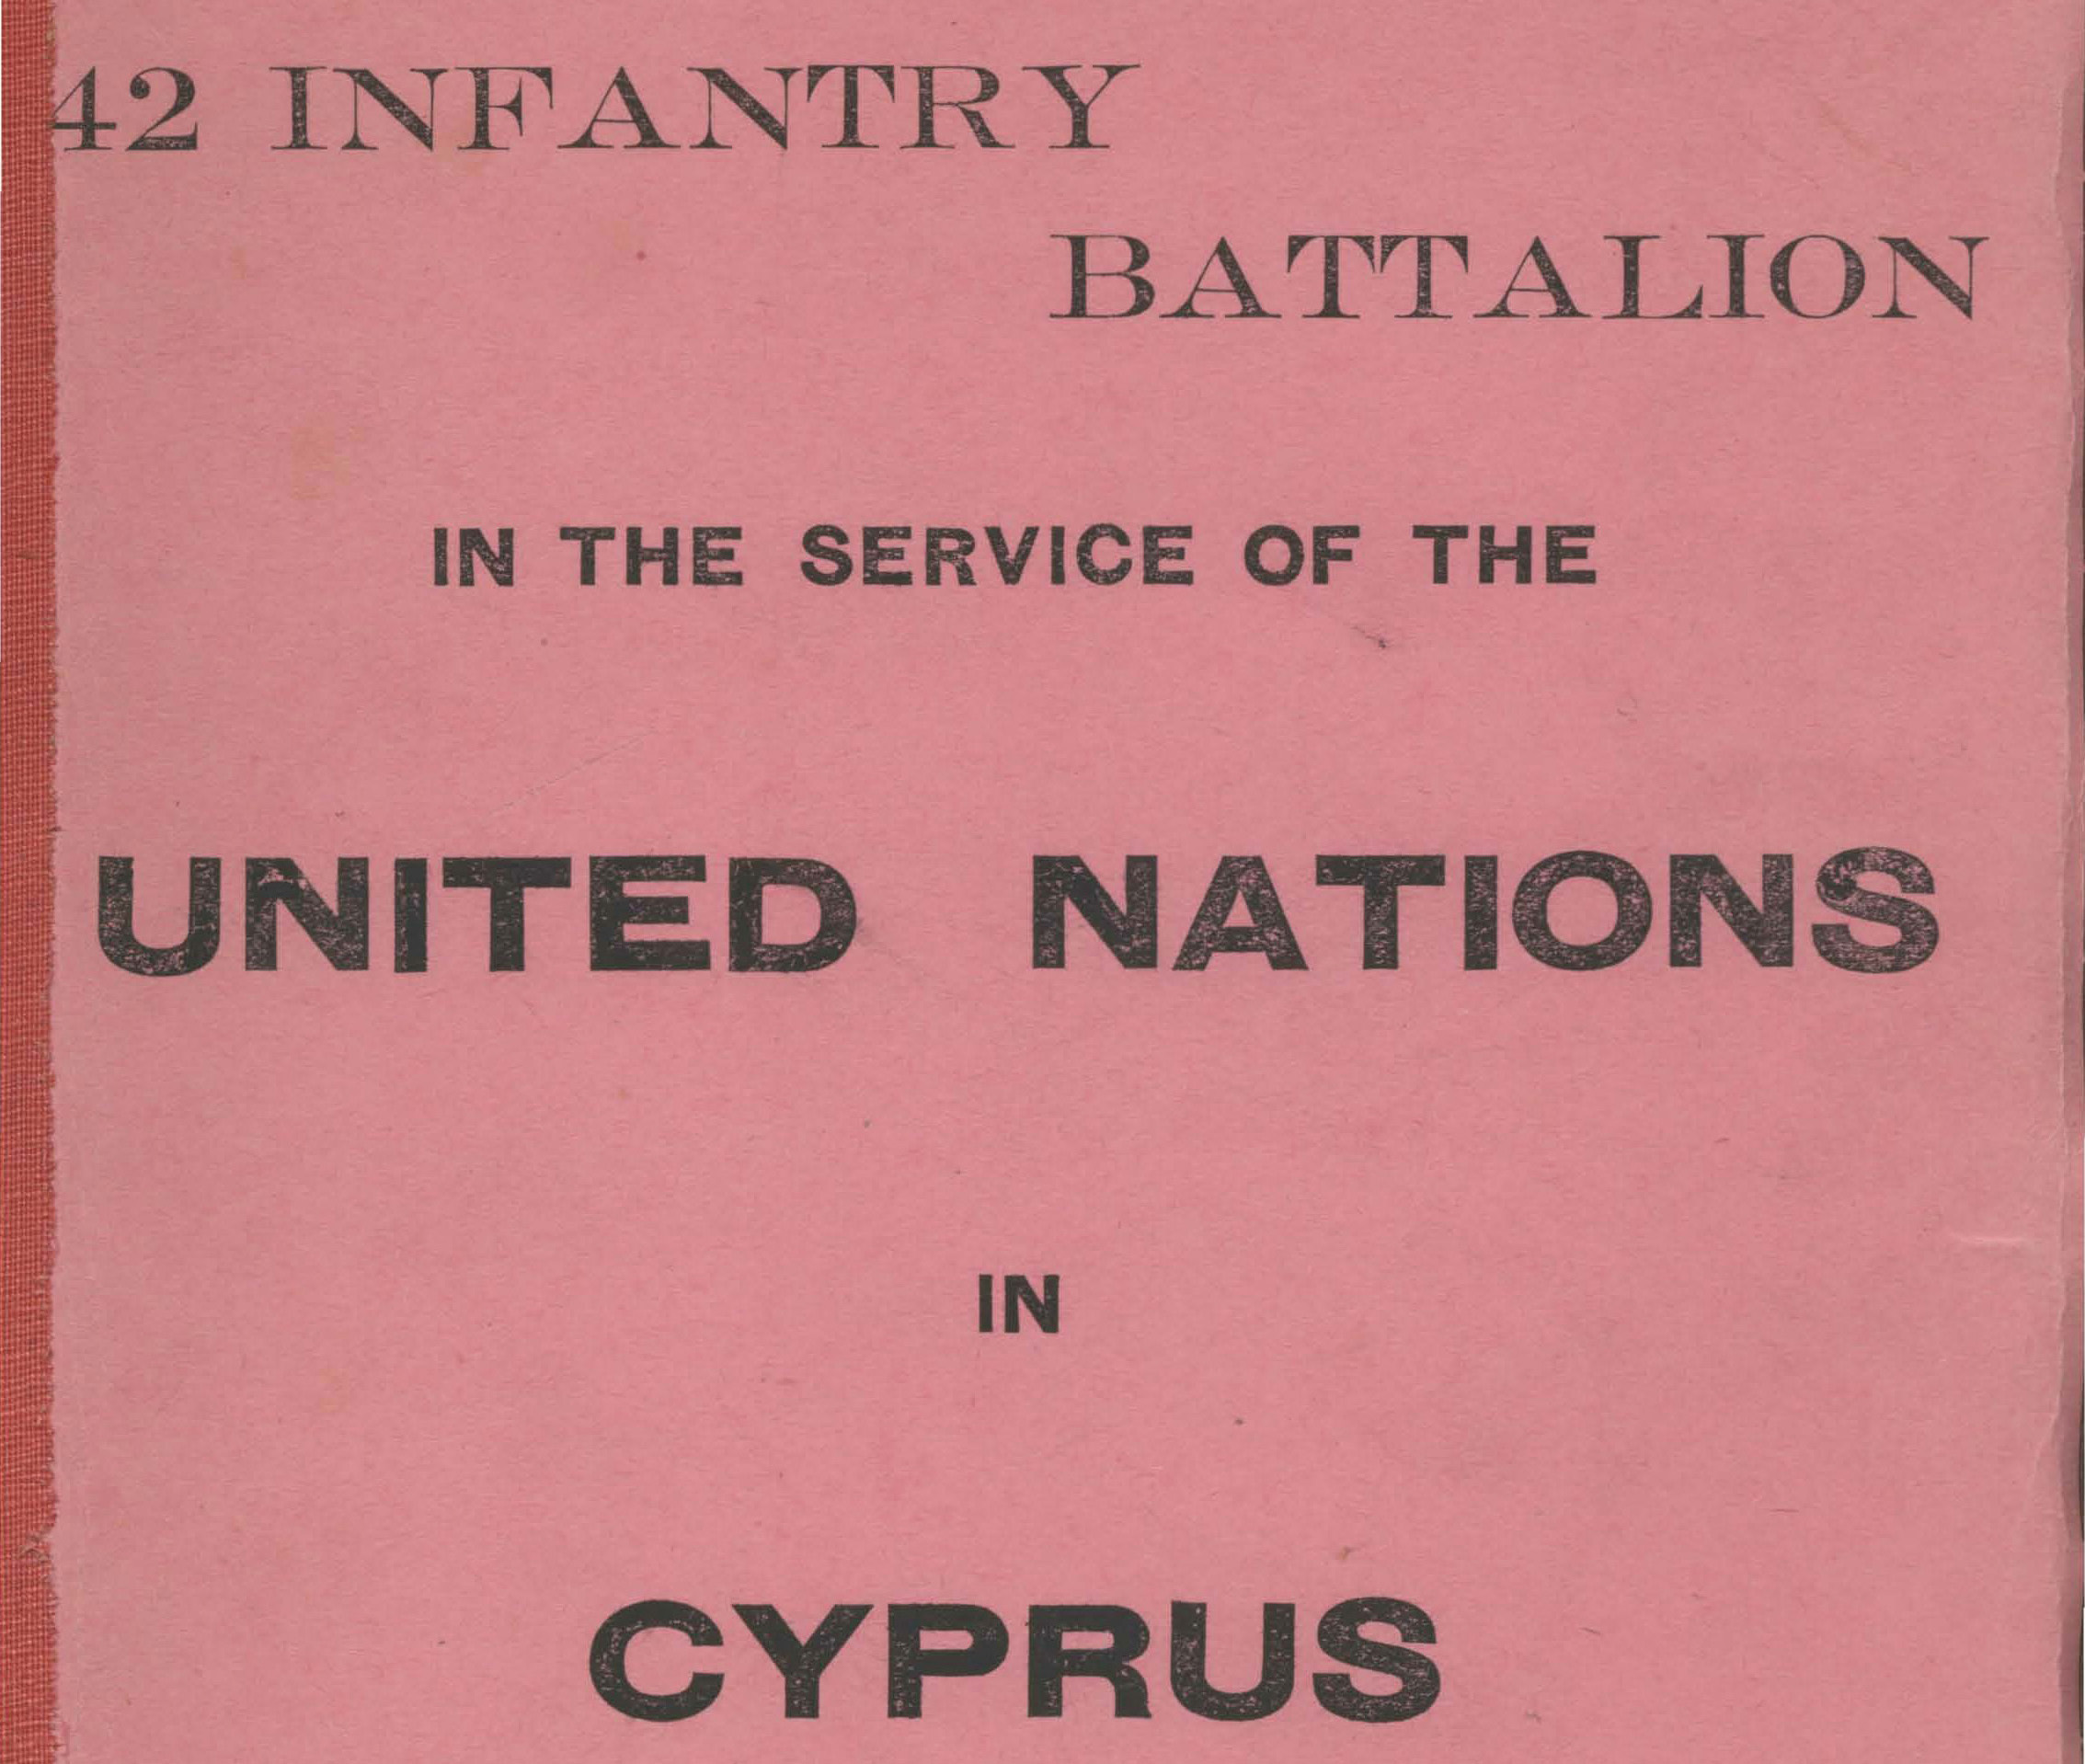 42 Inf Bn Cyprus